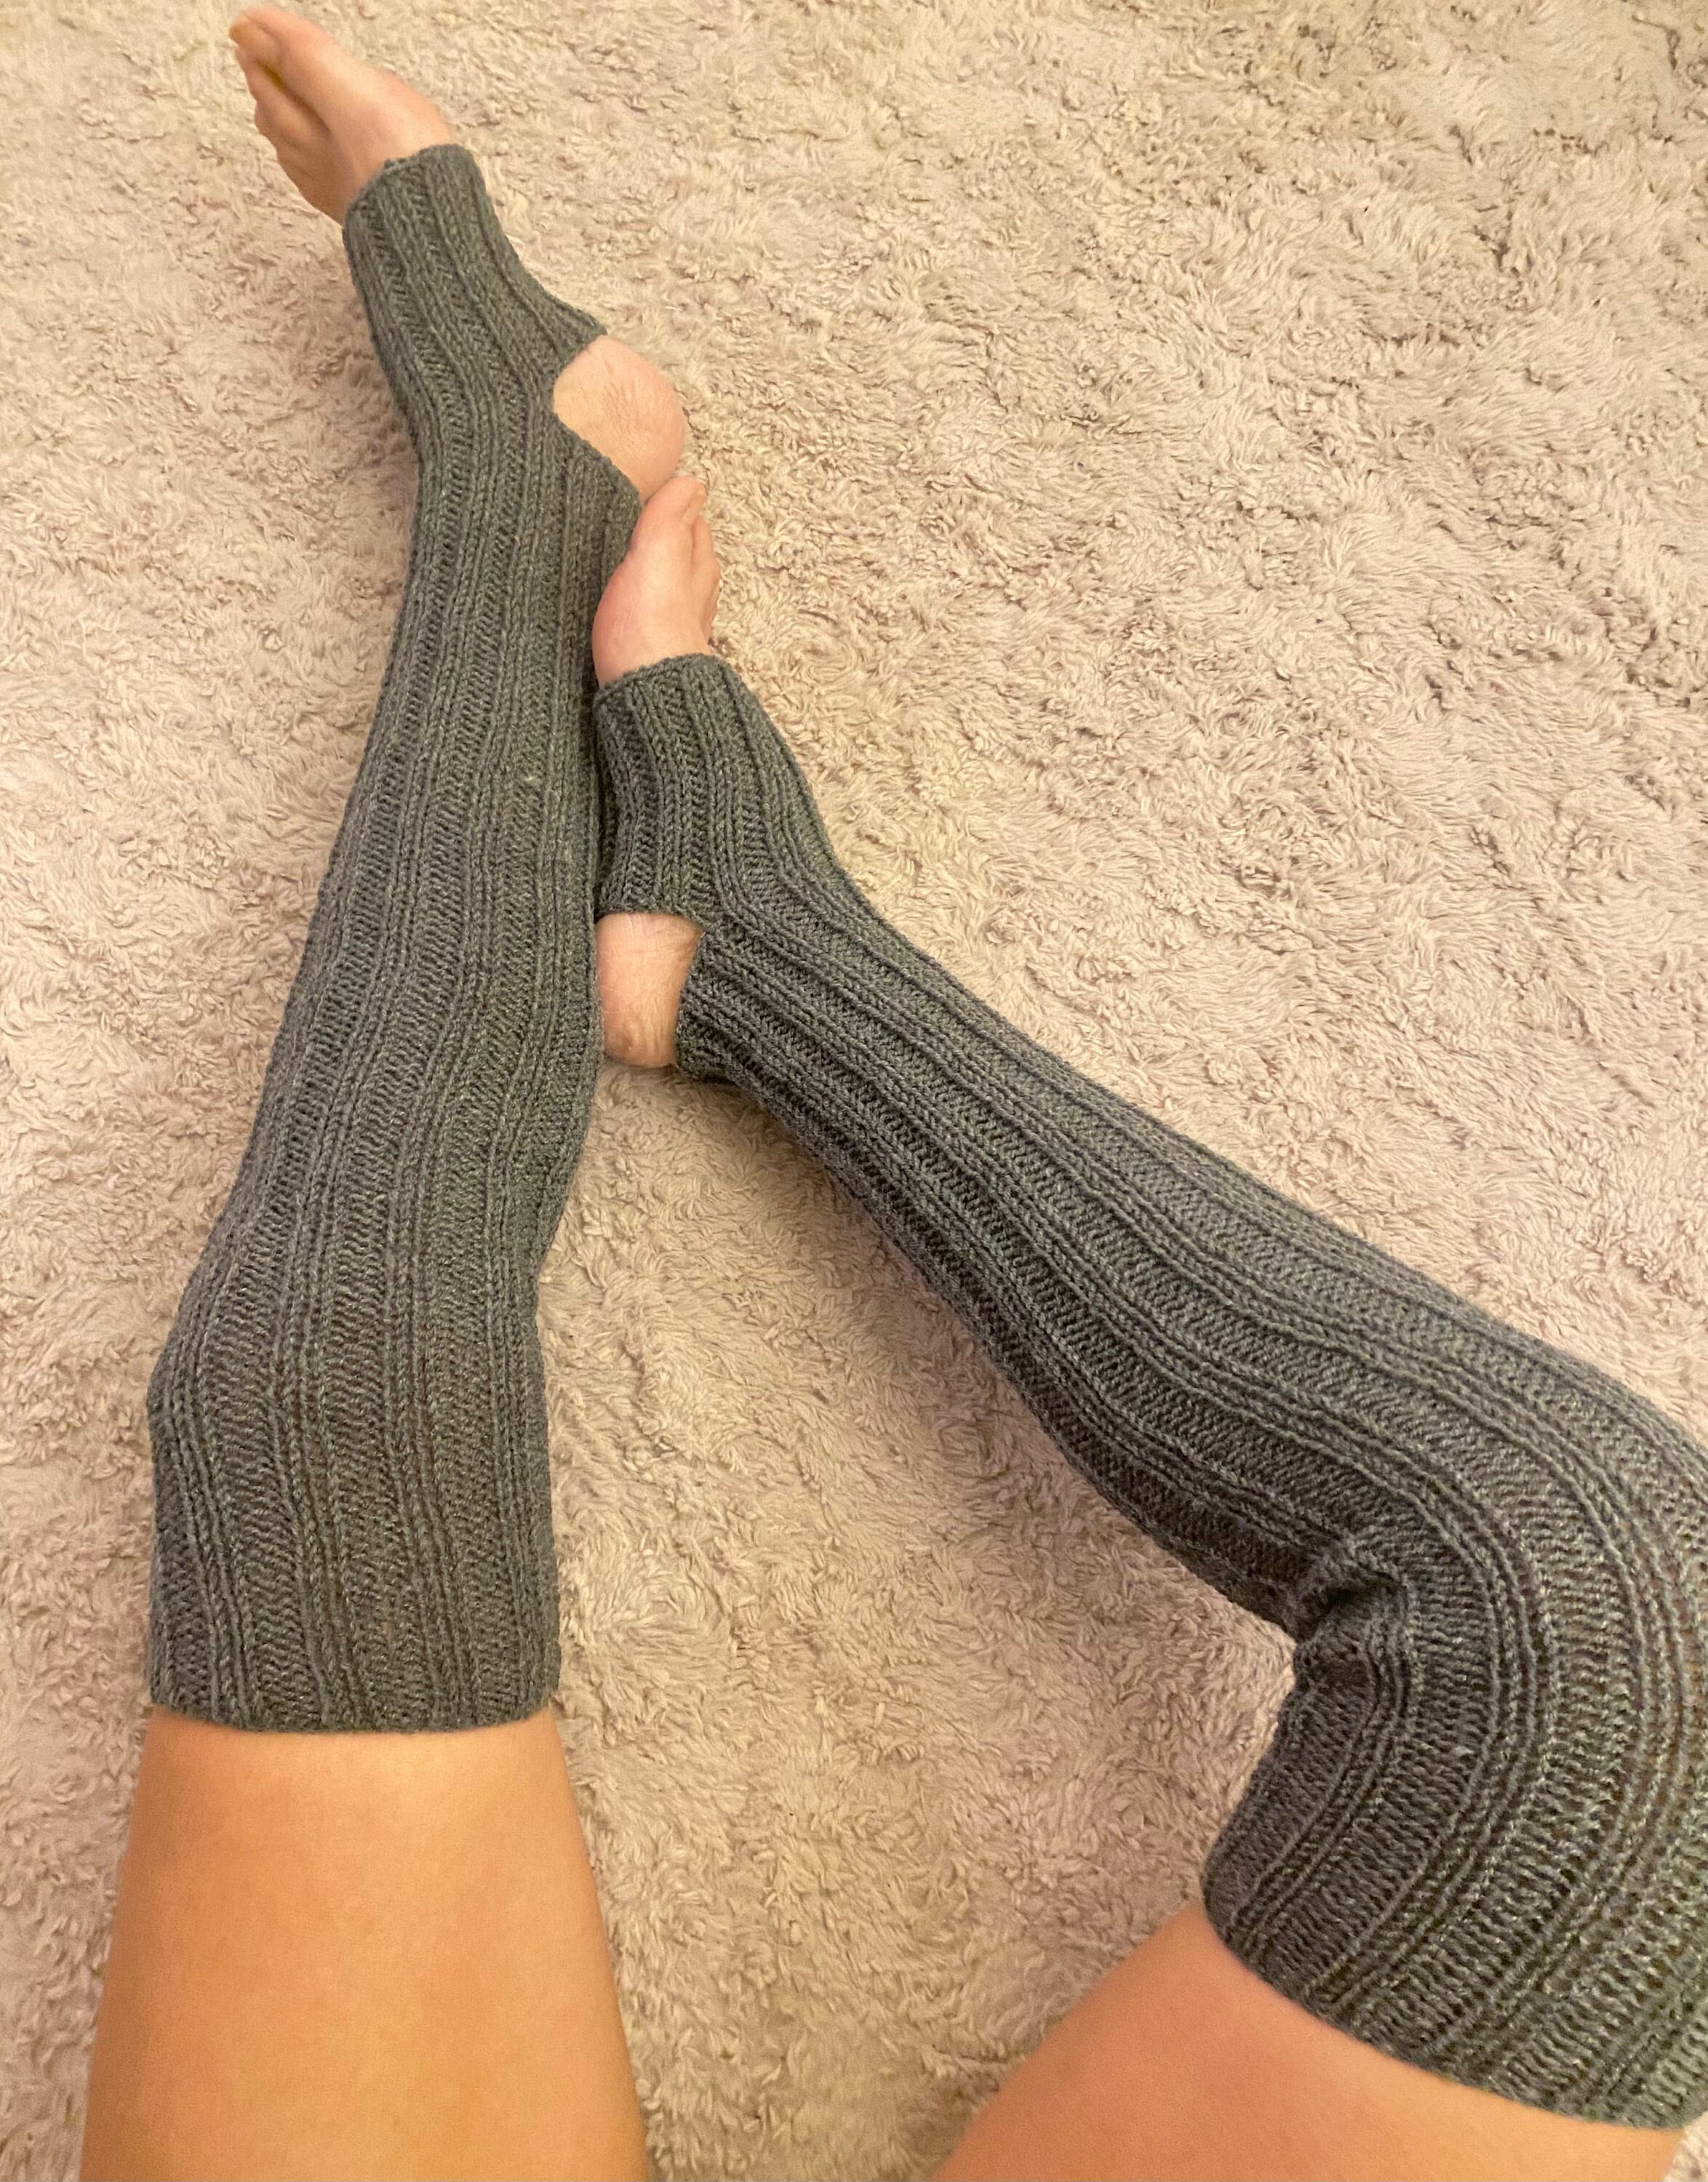 Toeless Yoga Socks-soft and Stylish Original Pattern Long Merino